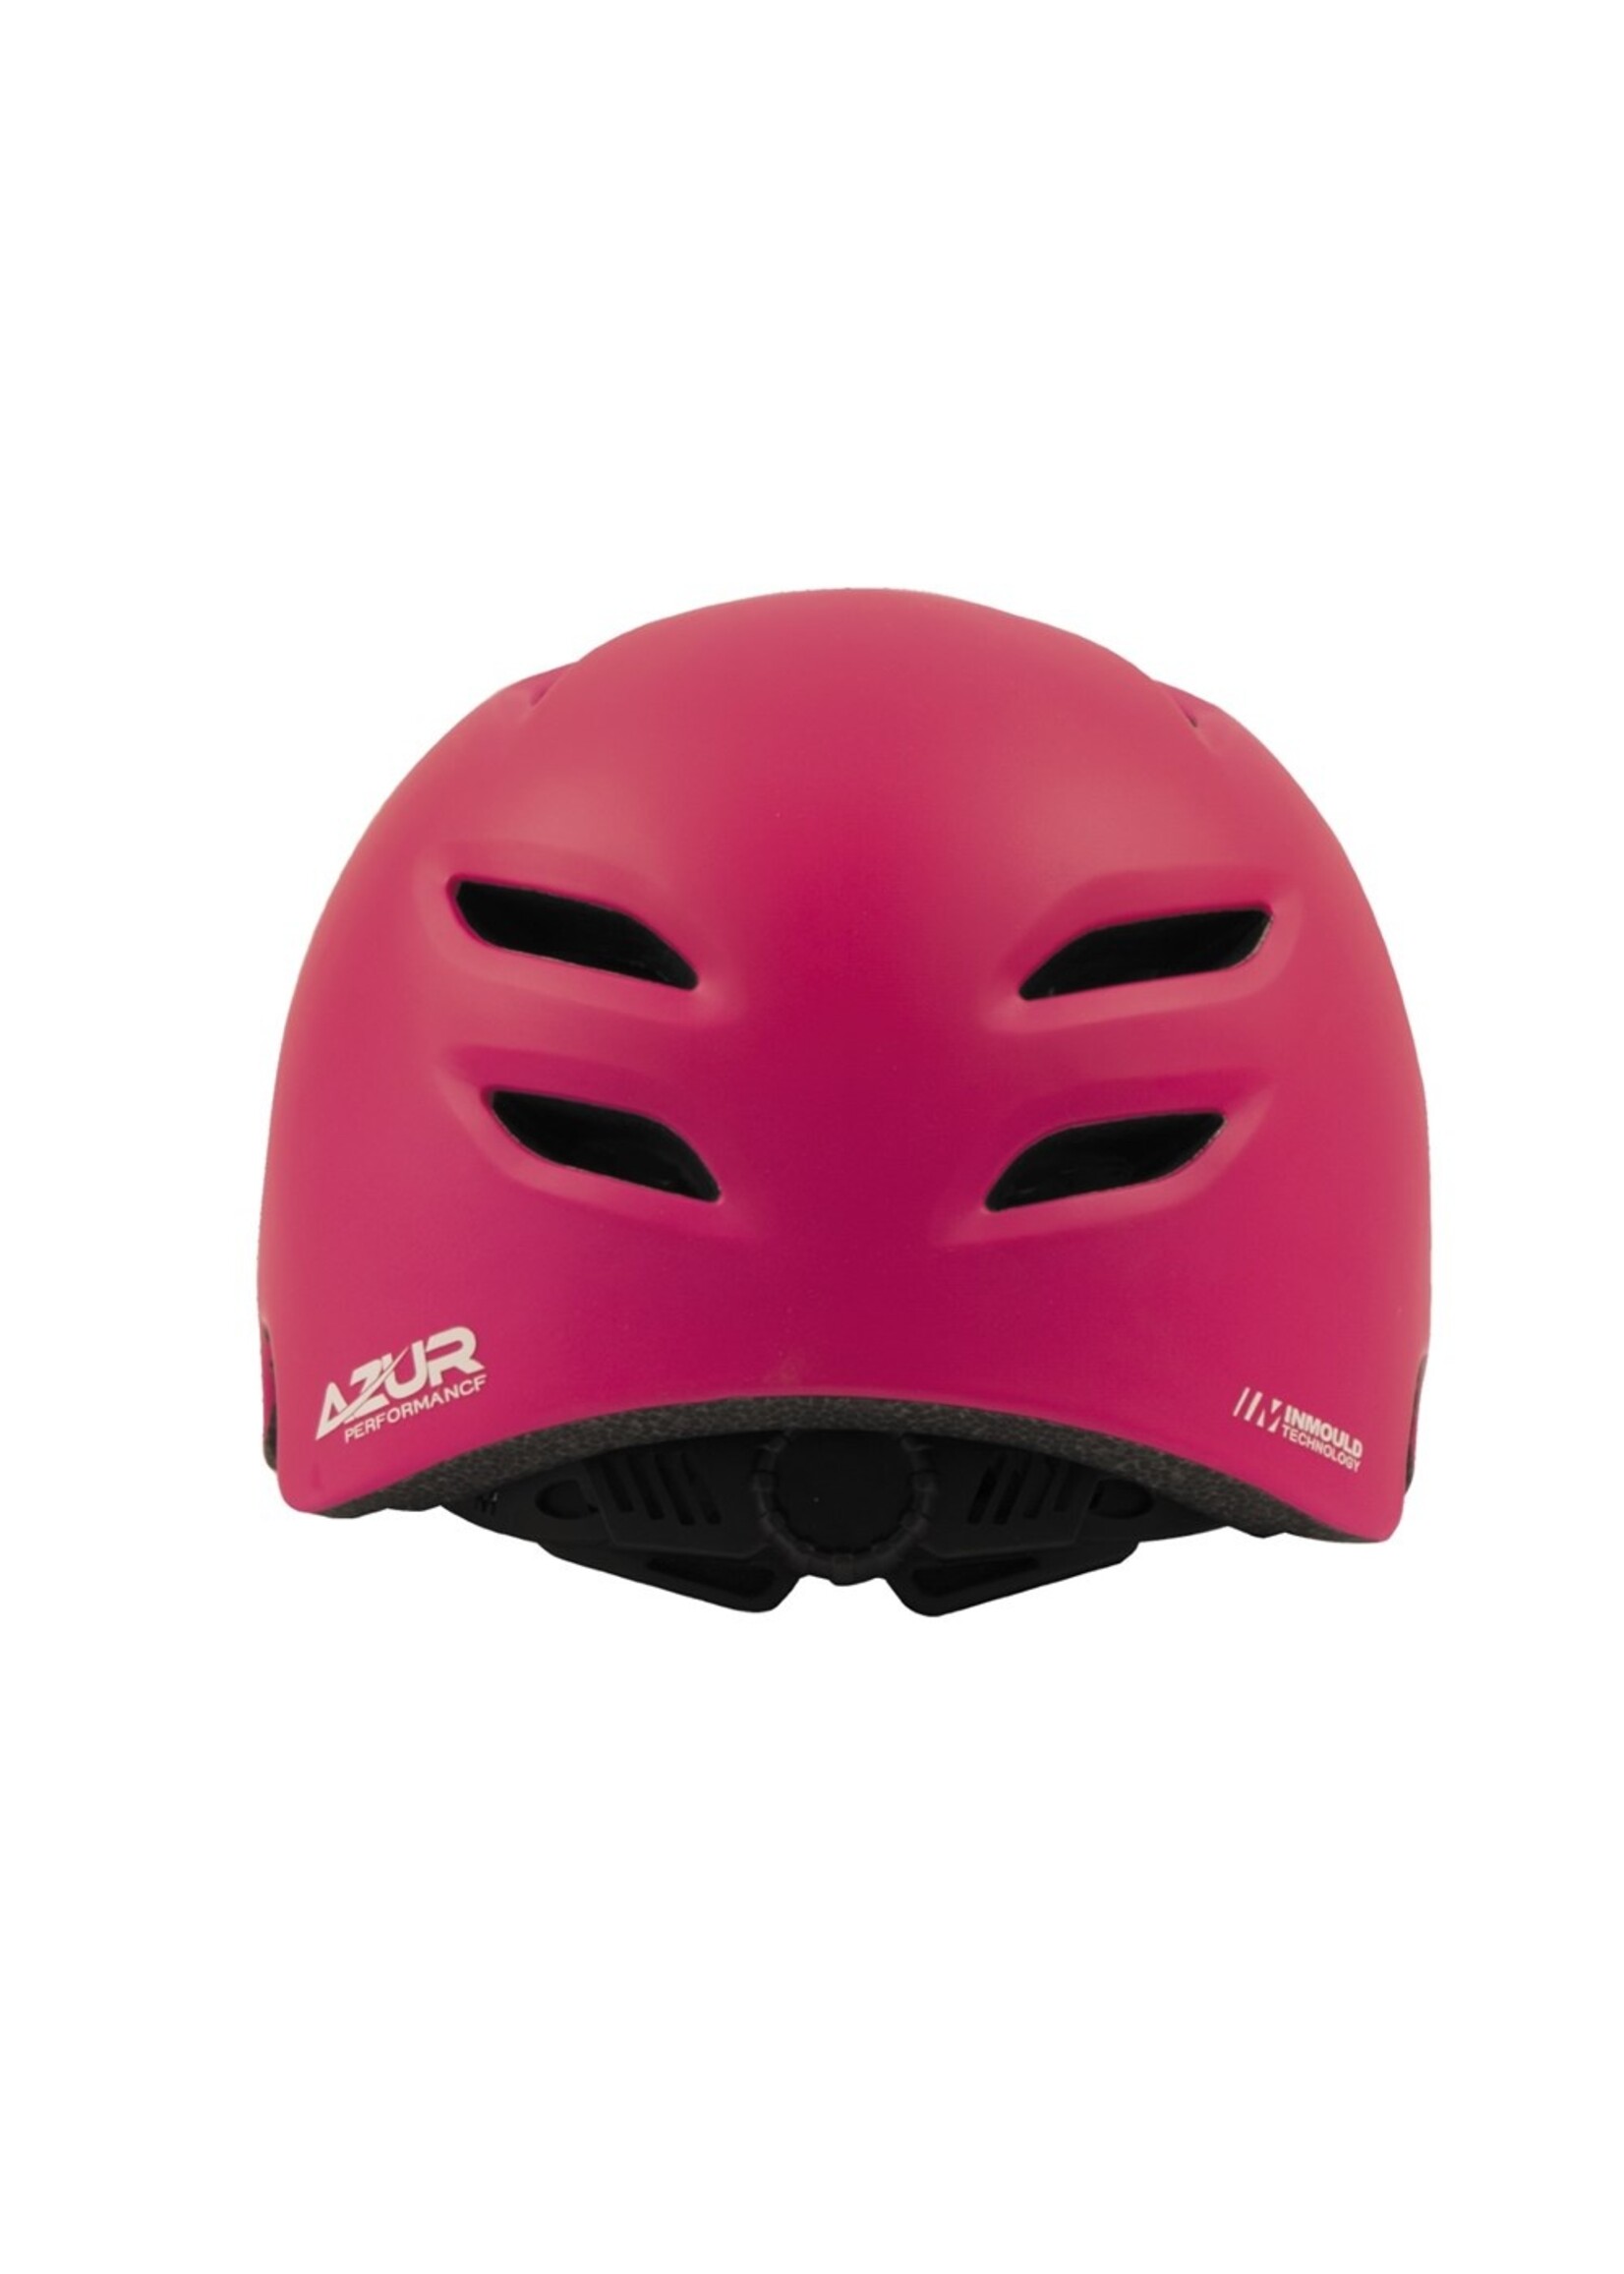 AZUR Azur U91 Helmet